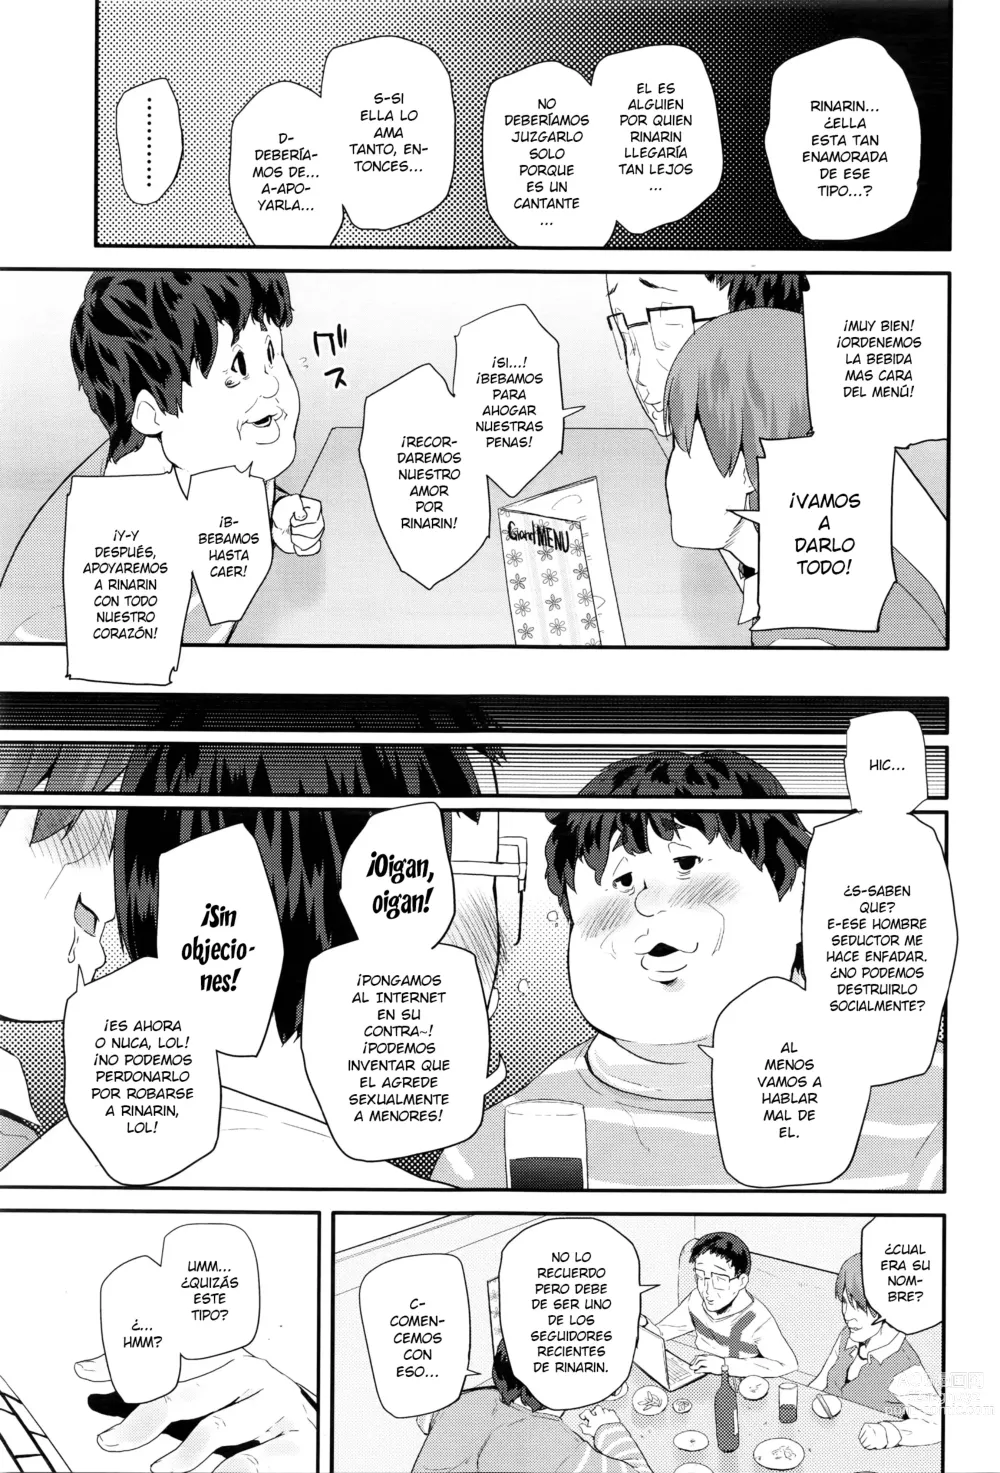 Page 59 of doujinshi Pako Pako Rina Rin 1-4